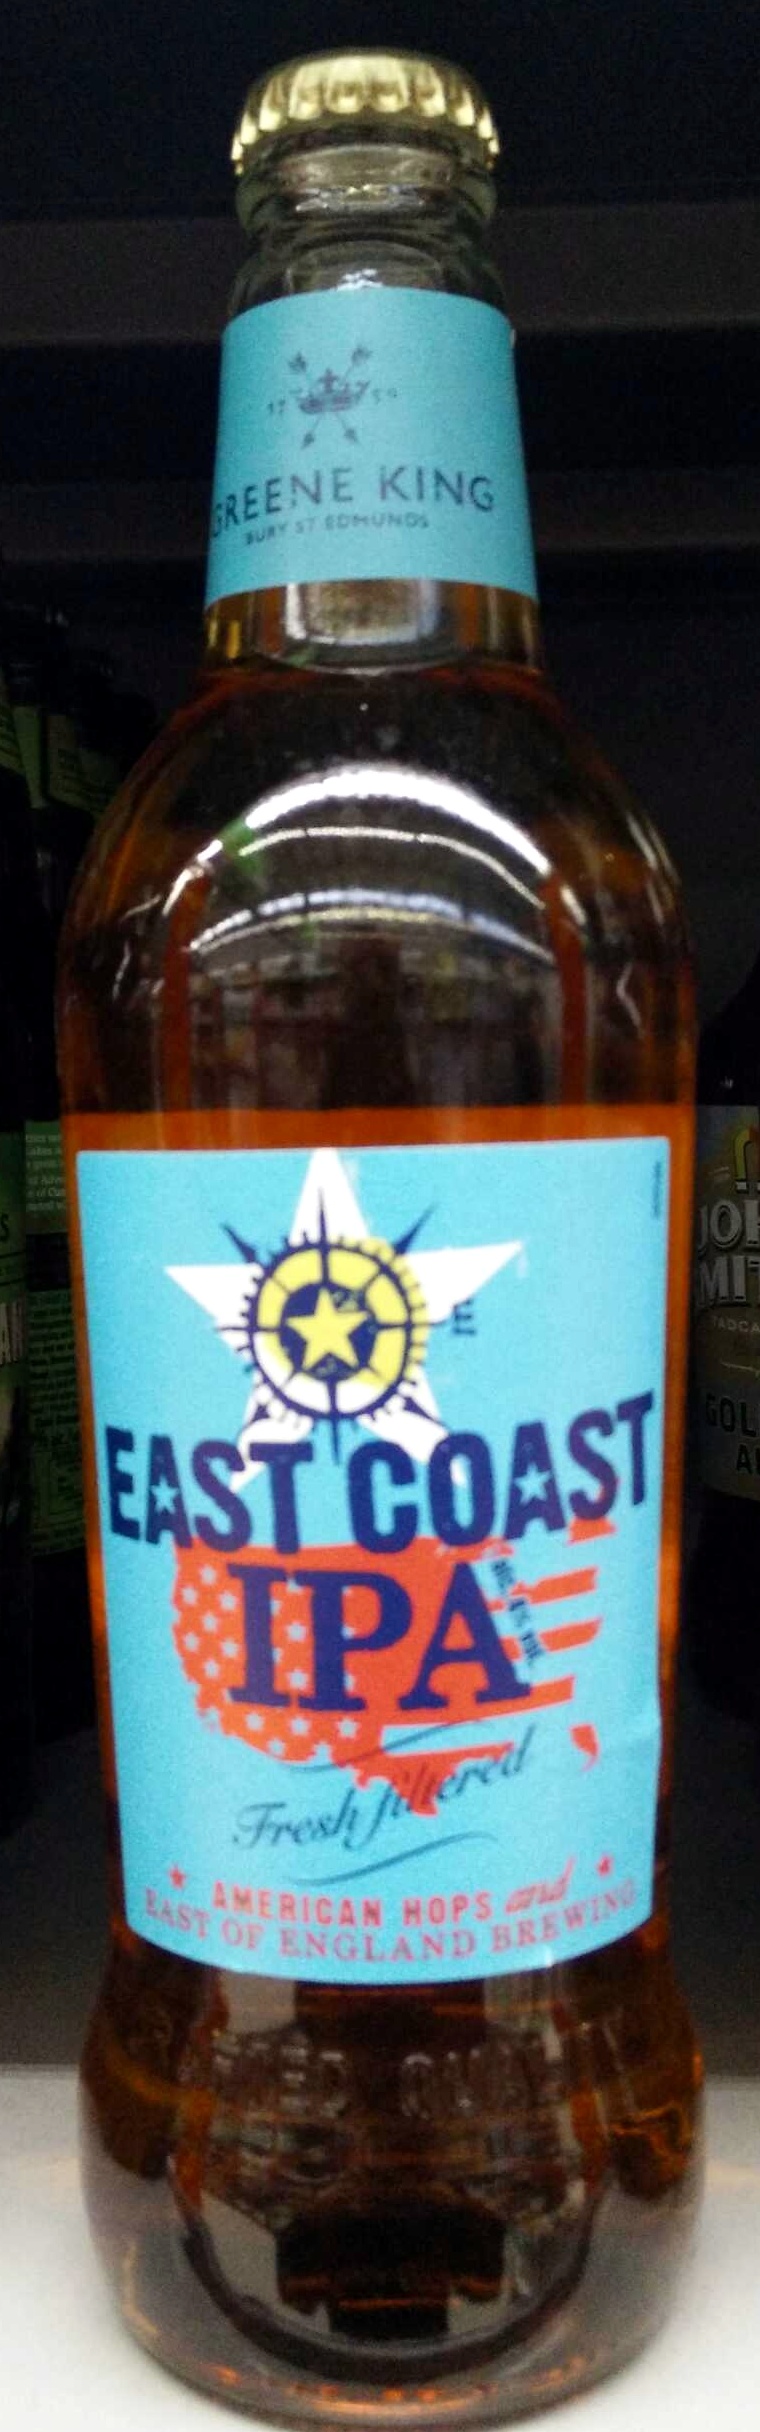 East Coast IPA - Product - en